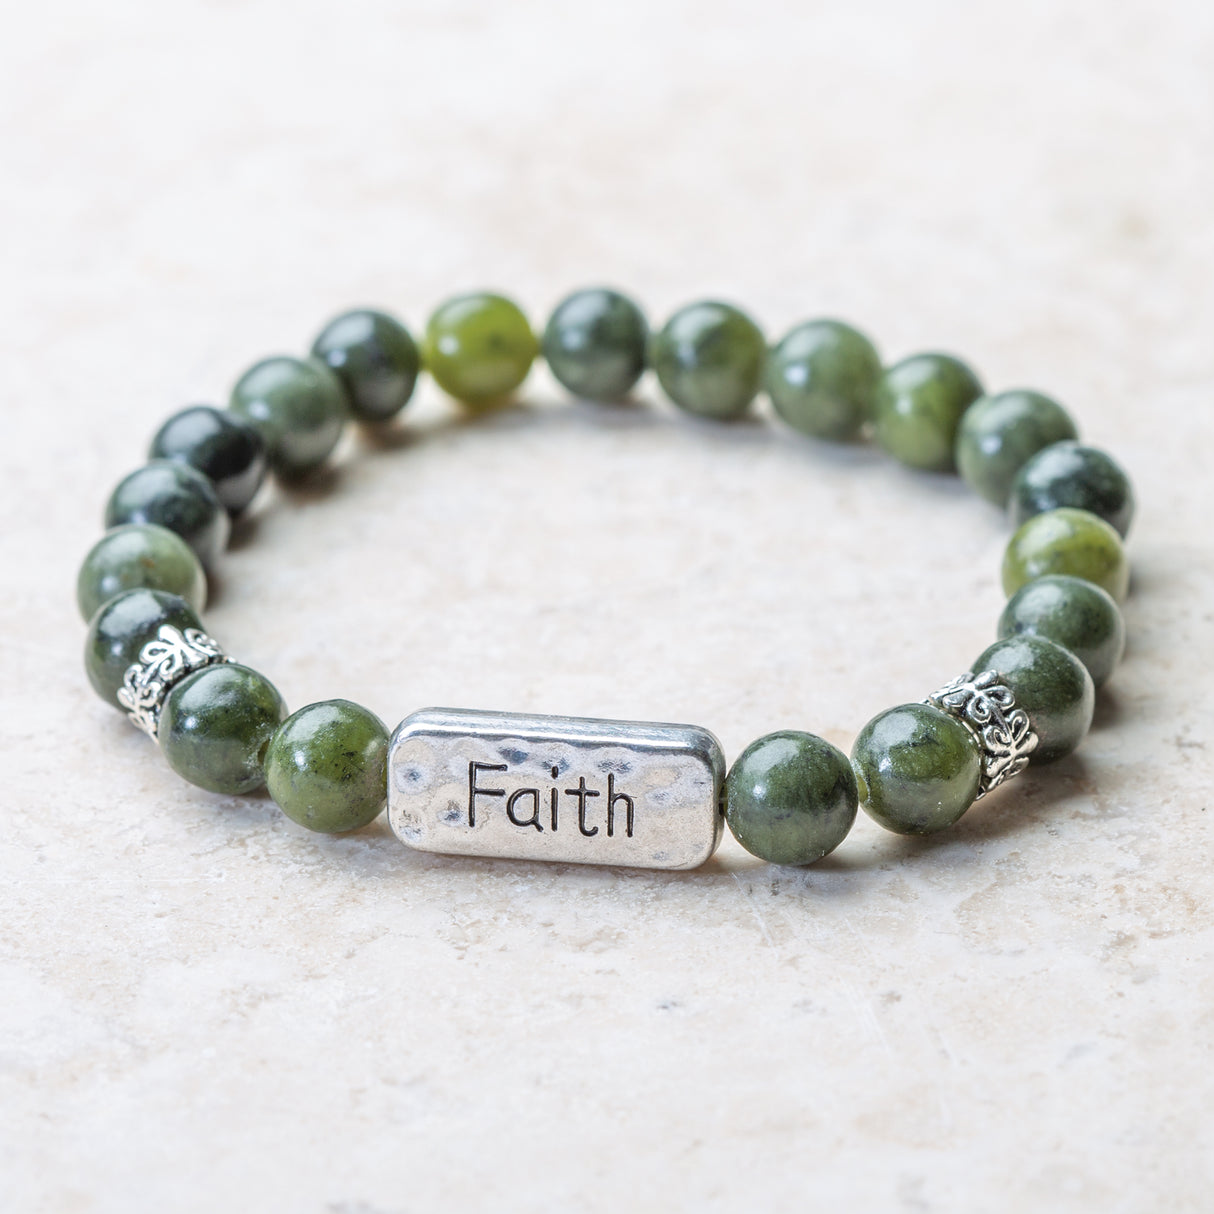 Connemara Faith Stretch Bracelet - Creative Irish Gifts